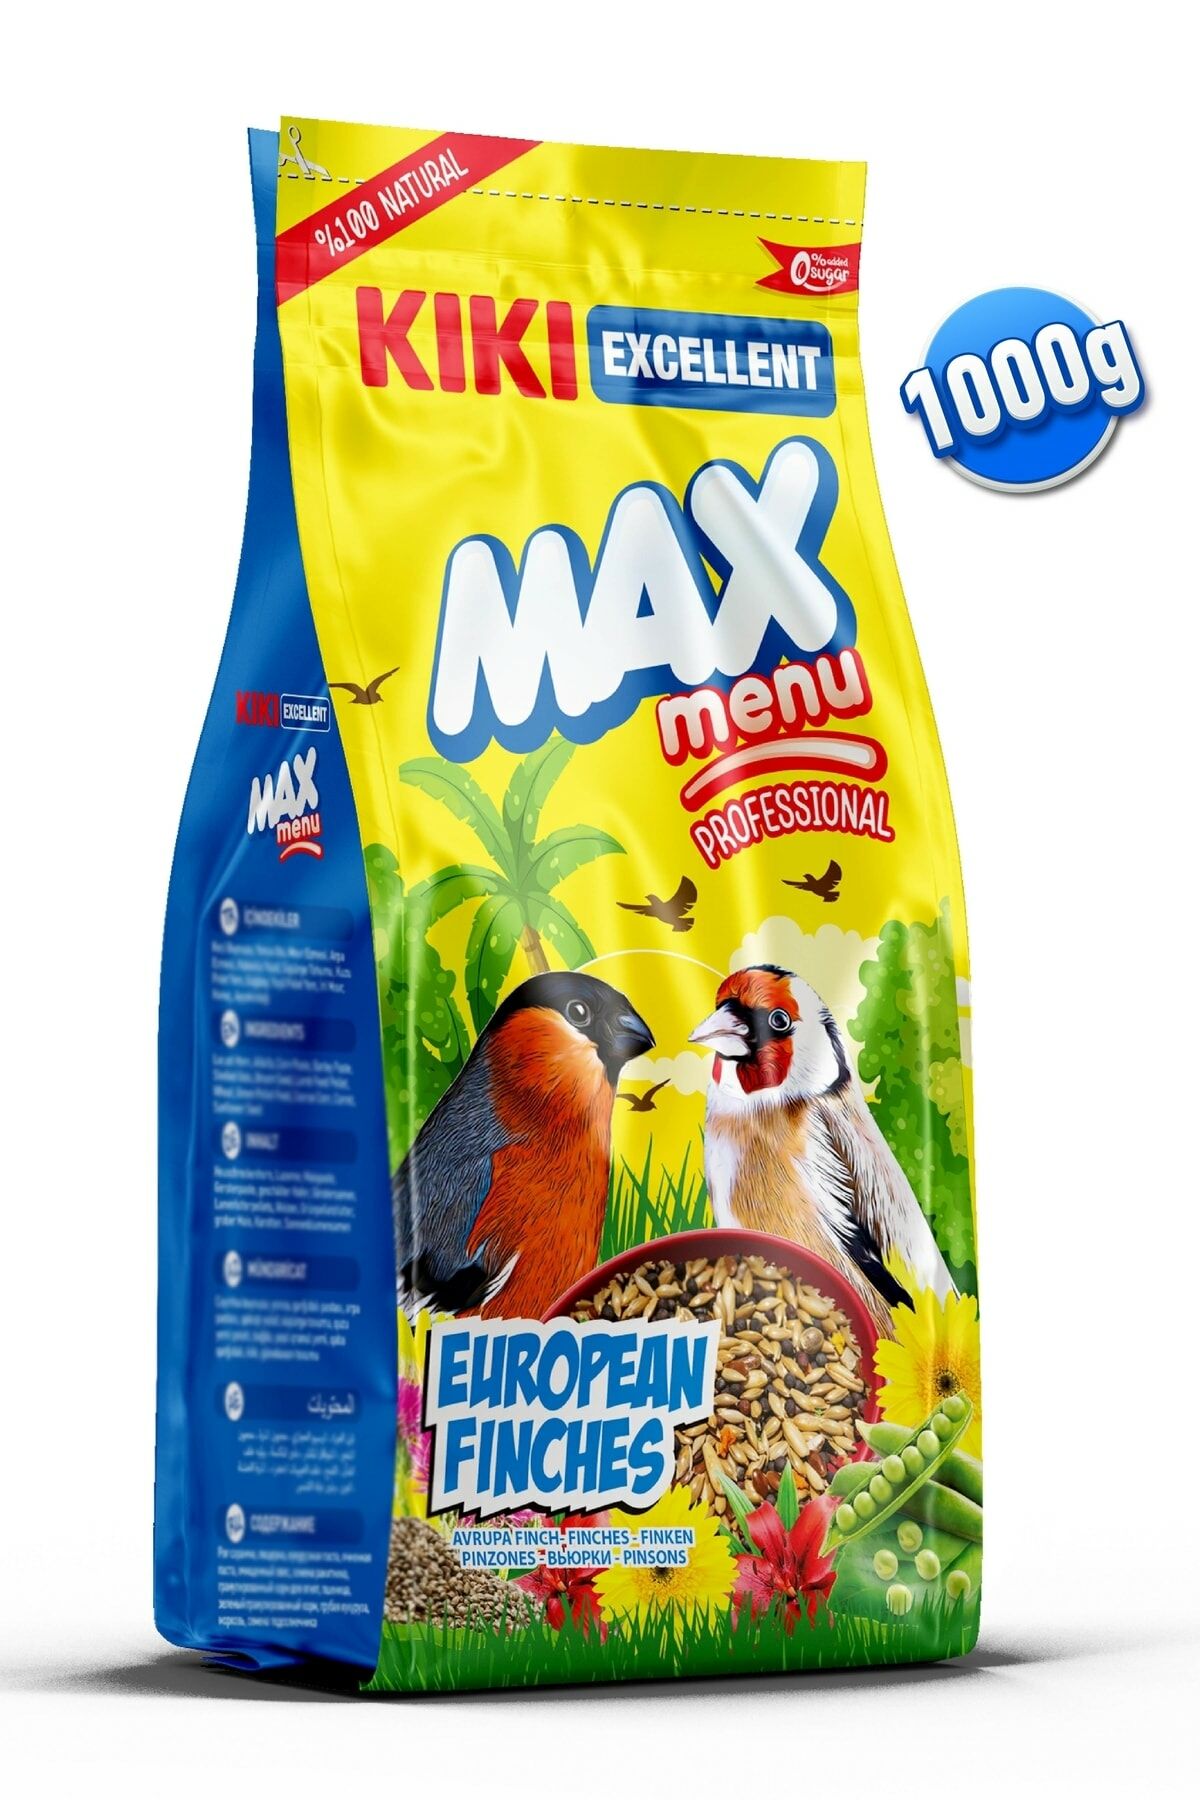 Kiki Excellent Kuş Max Menu European Finches Avrupalı Finç Yemi 1000 Gr.